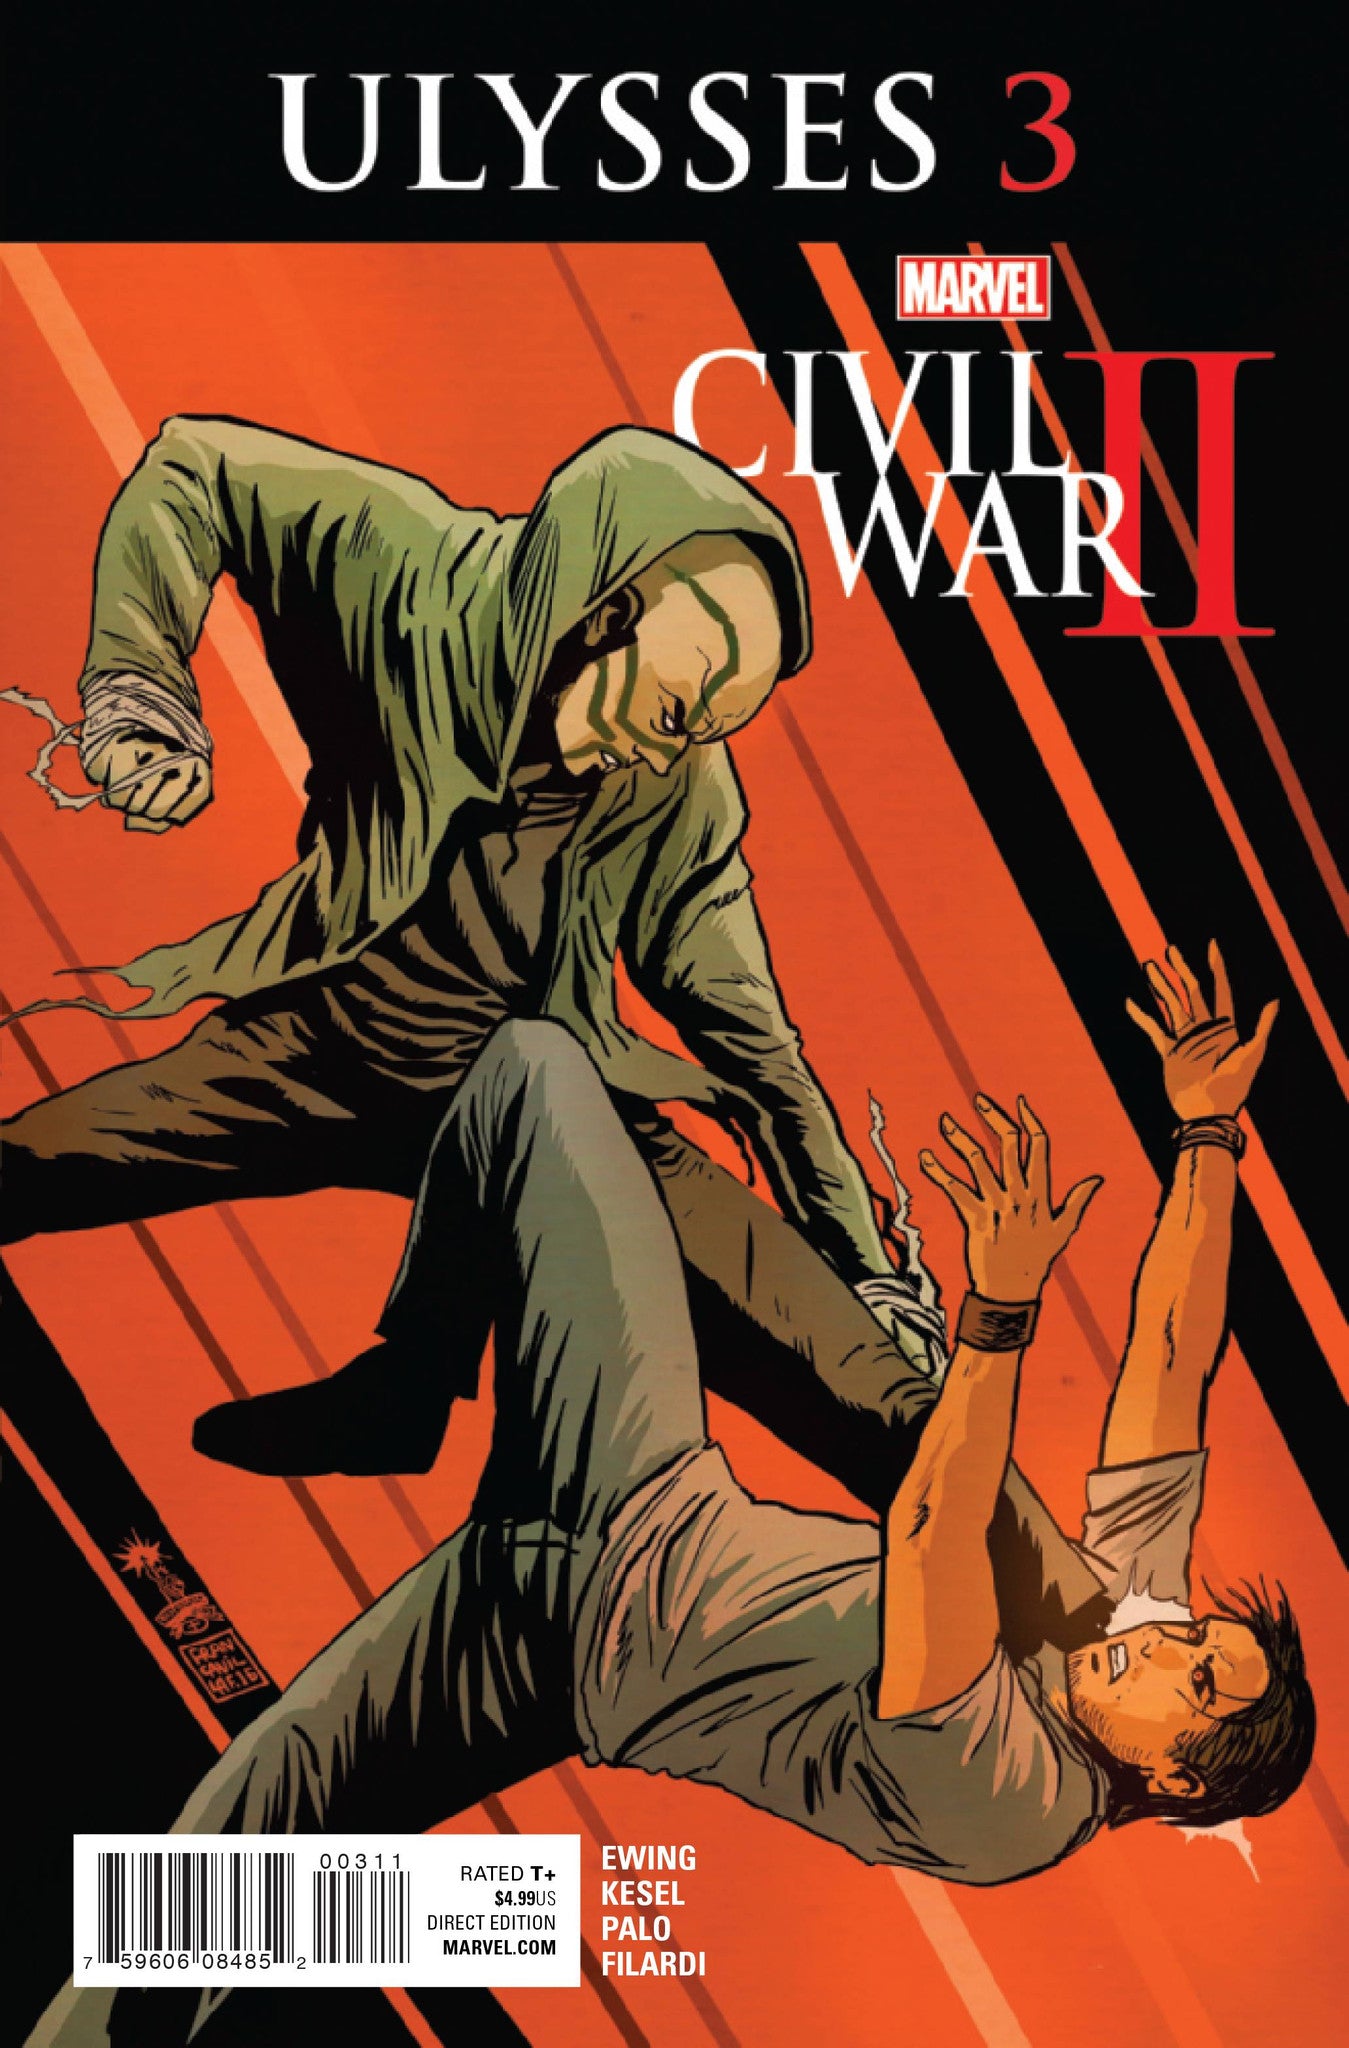 CIVIL WAR II ULYSSES #3 (OF 3) COVER